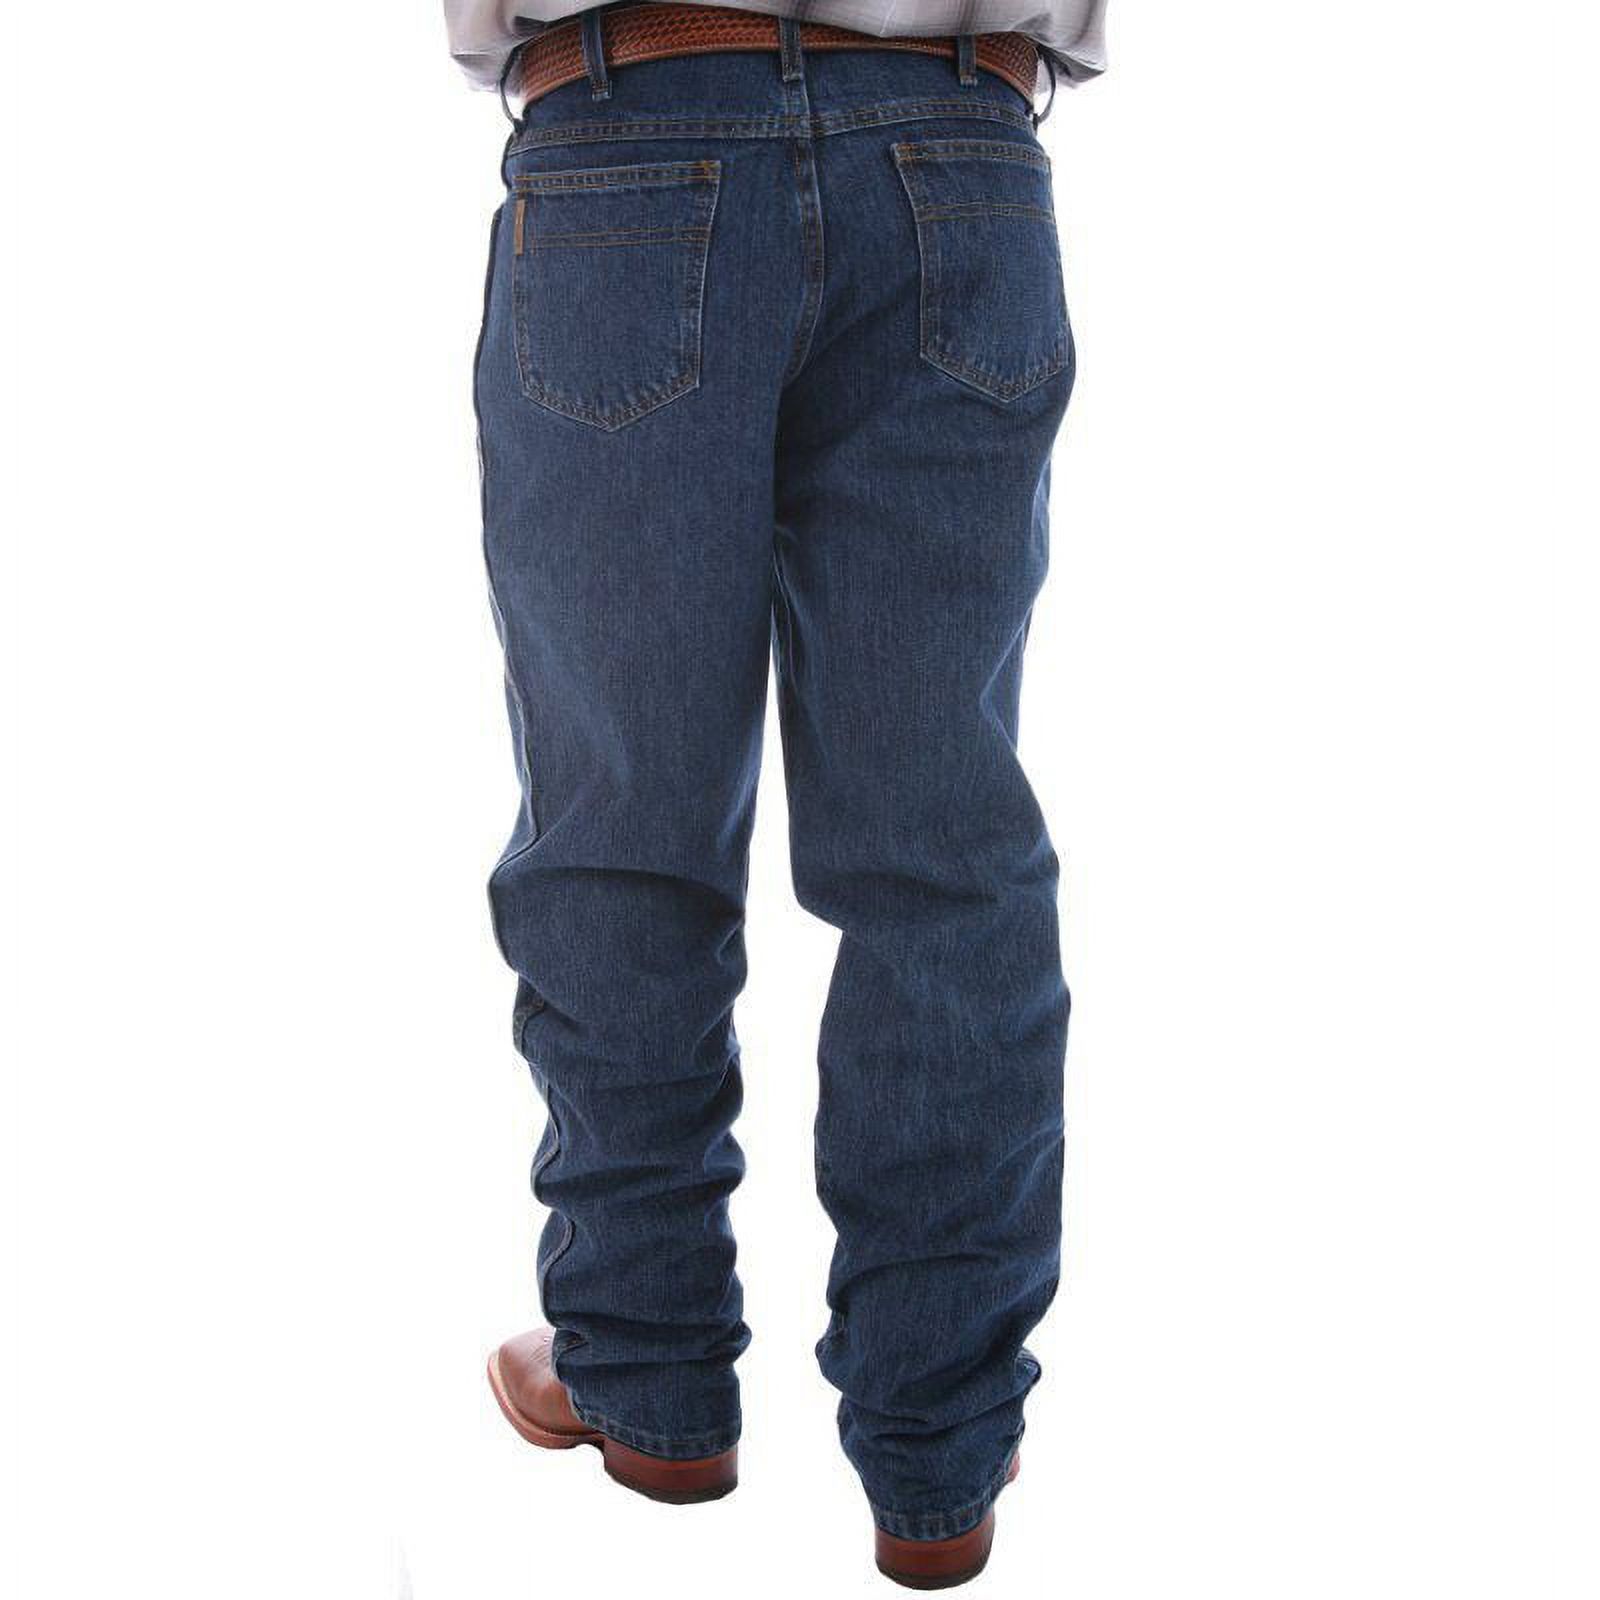 Cinch Apparel Mens Green Label Original Fit Jeans 33W x 40L Dark Stonewash - image 1 of 4